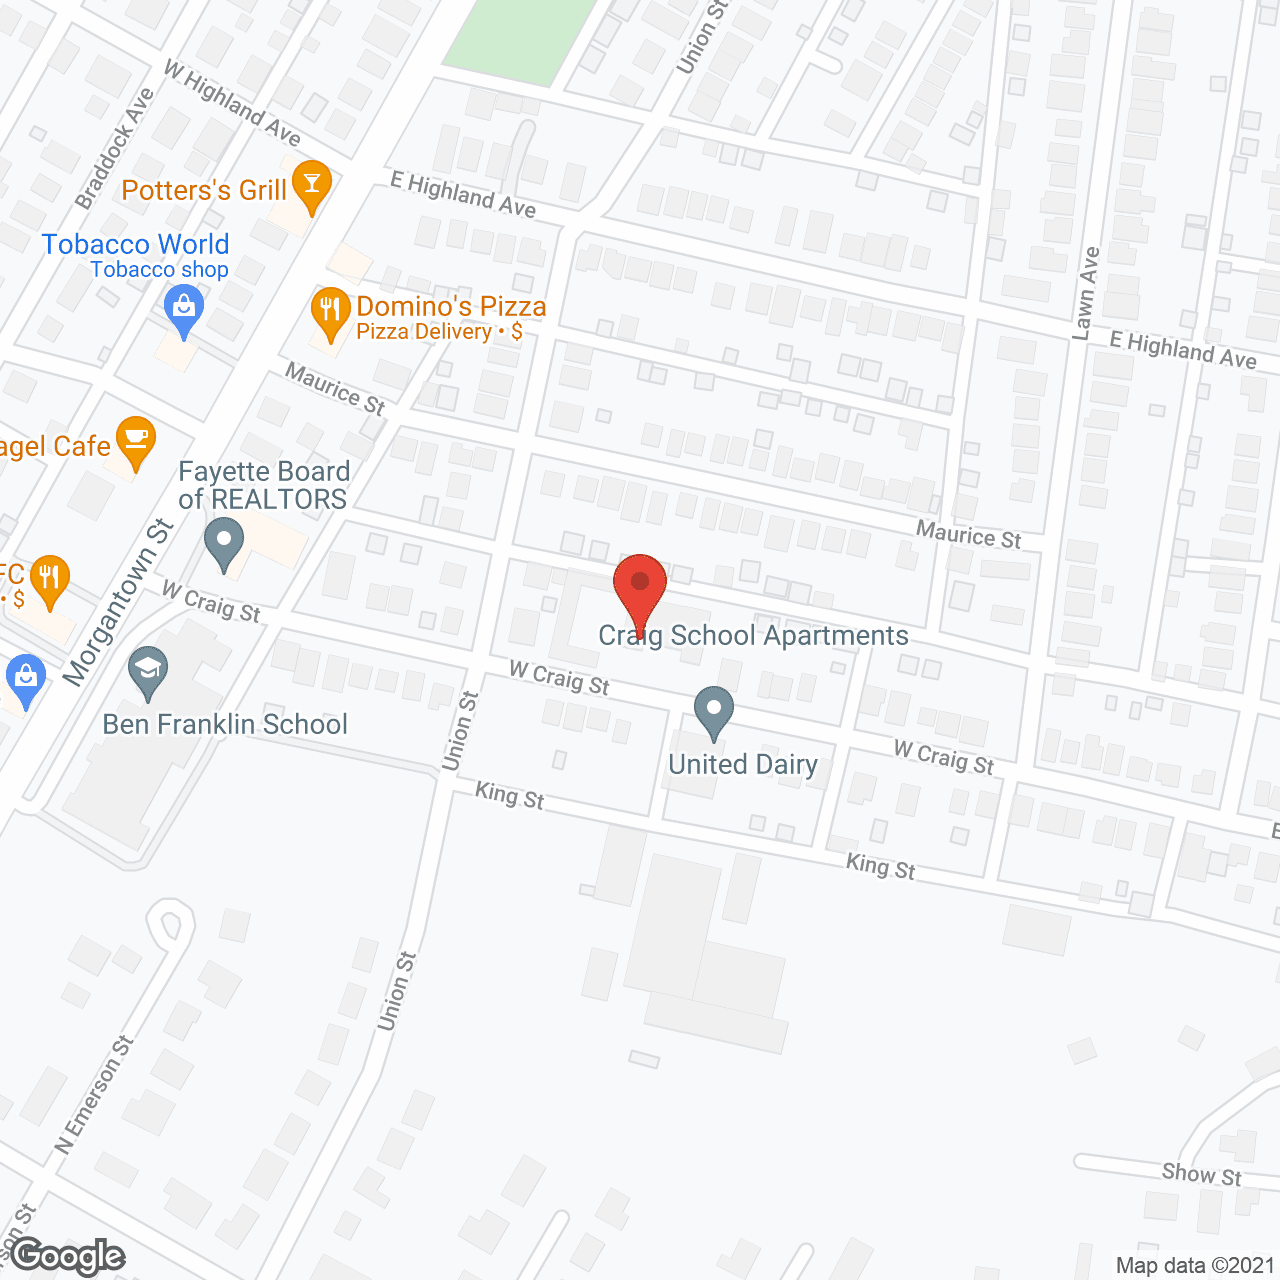 Craig School Apartments in google map